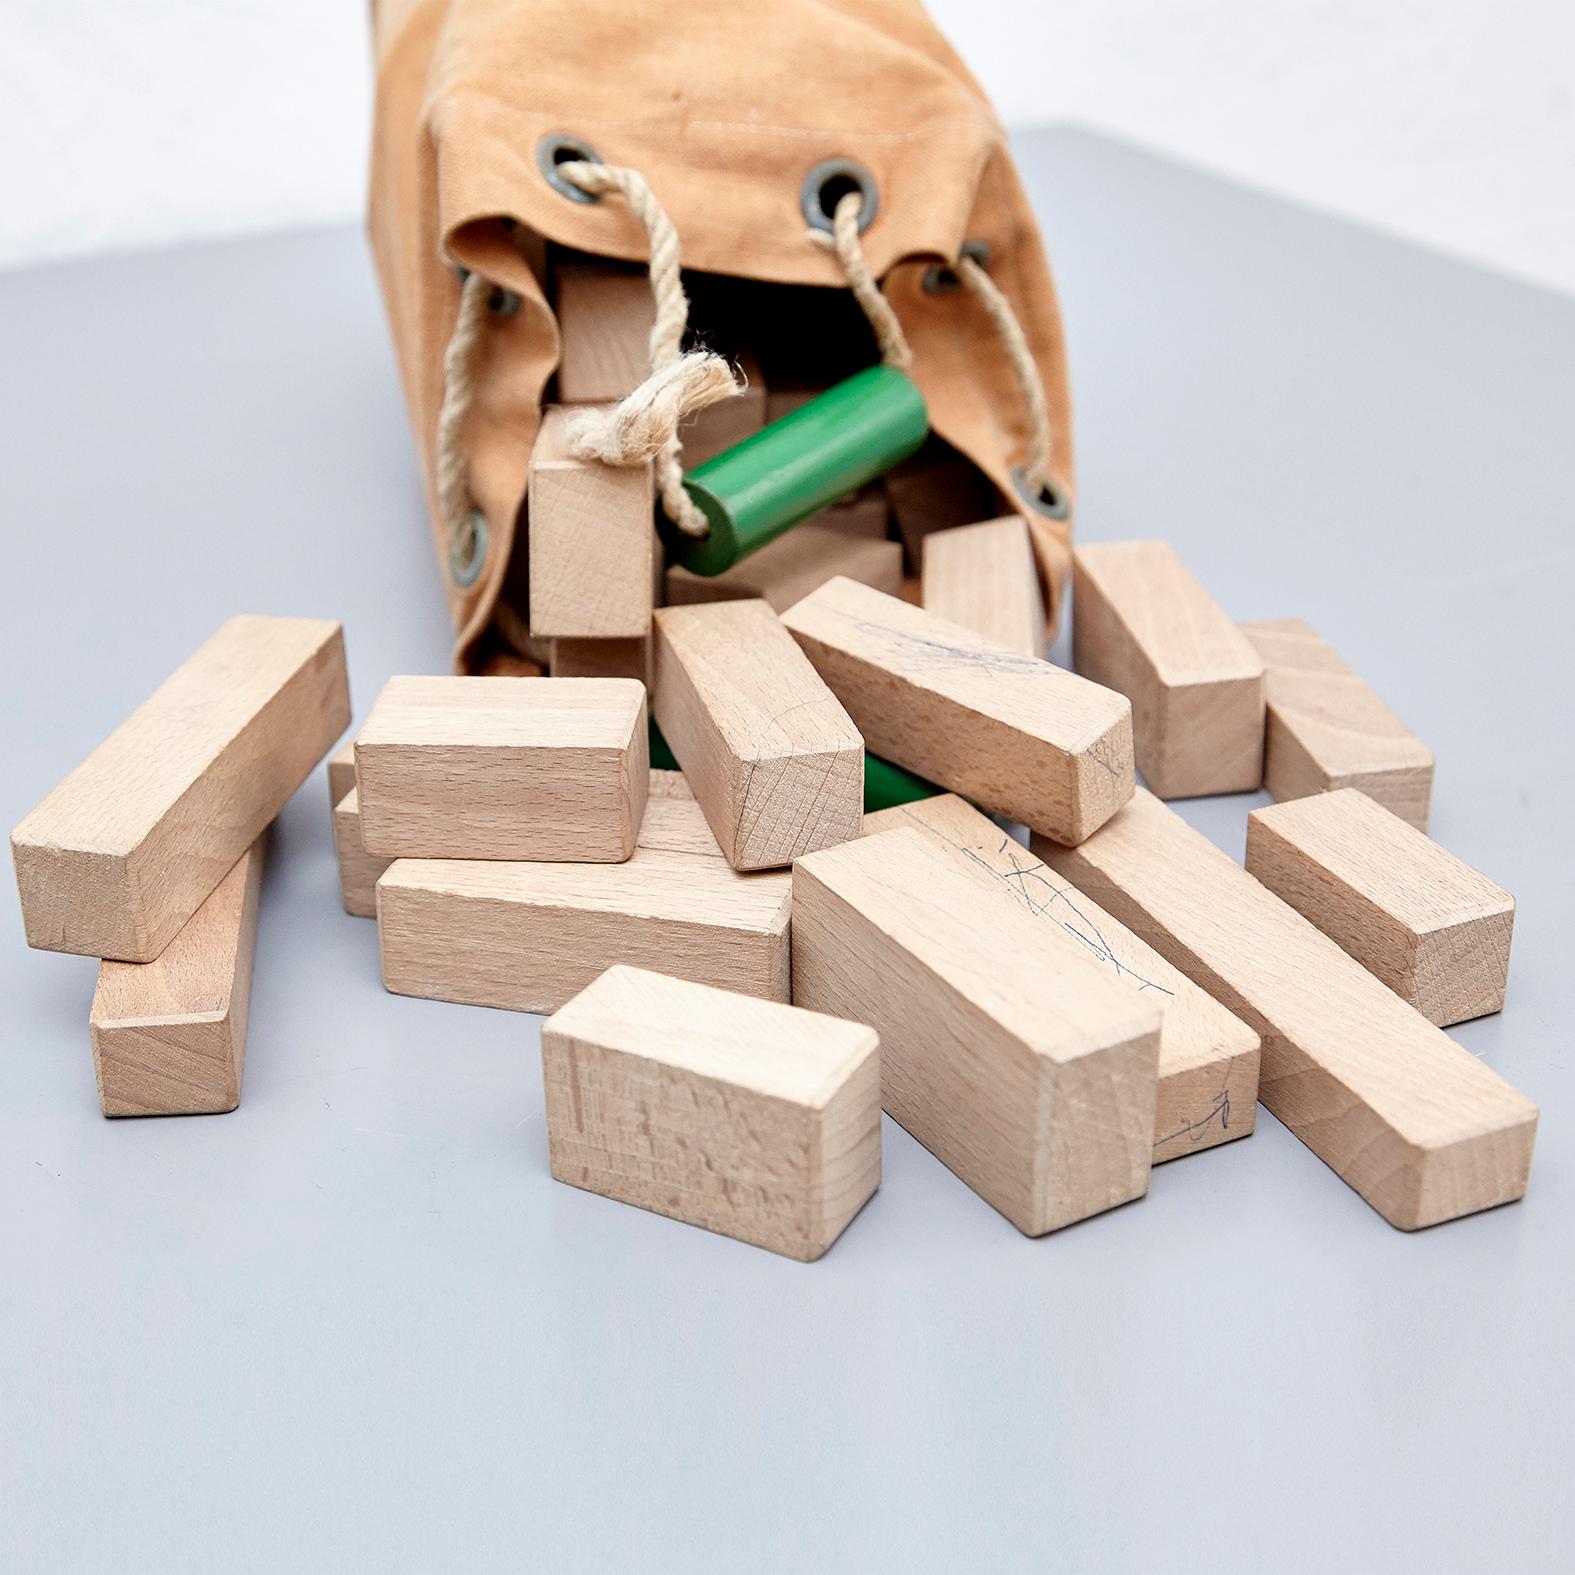 Ko Verzuu for Ado, Mid-Century Modern, Wood Blocks Construction Netherlands Toy  2